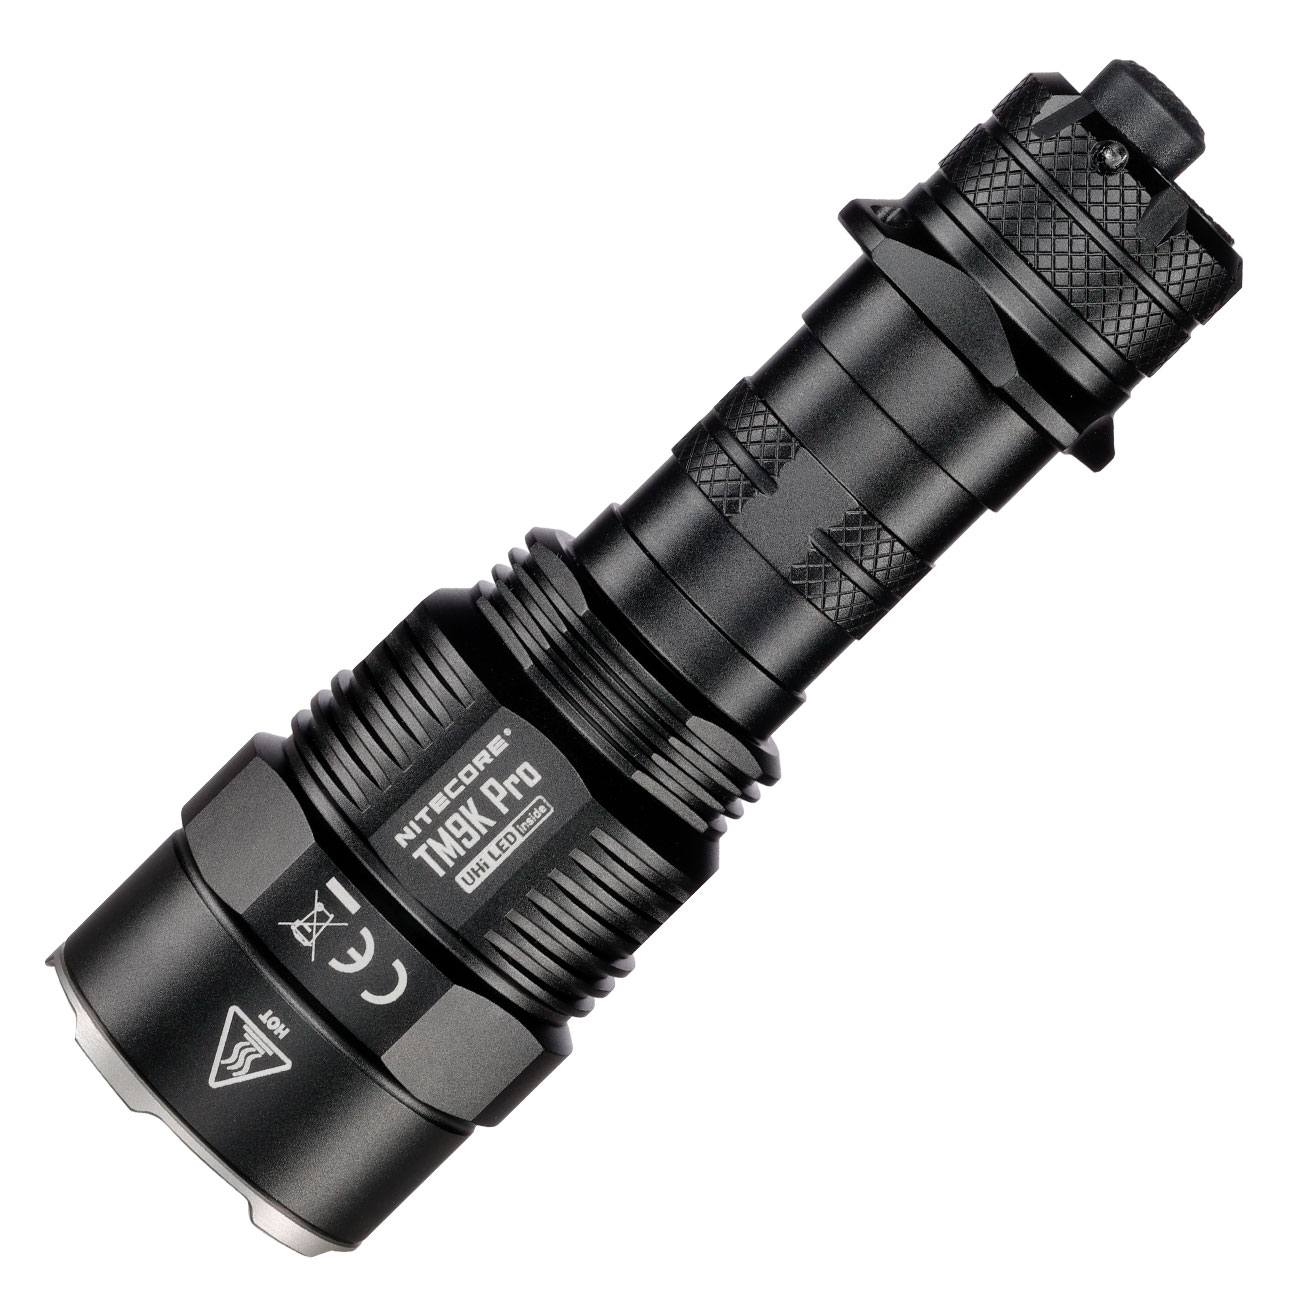 Nitecore LED Taschenlampe TM9K PRO 9900 Lumen schwarz inkl. Akku, Holster, Ladekabel, Lanyard und Grtelclip Bild 1